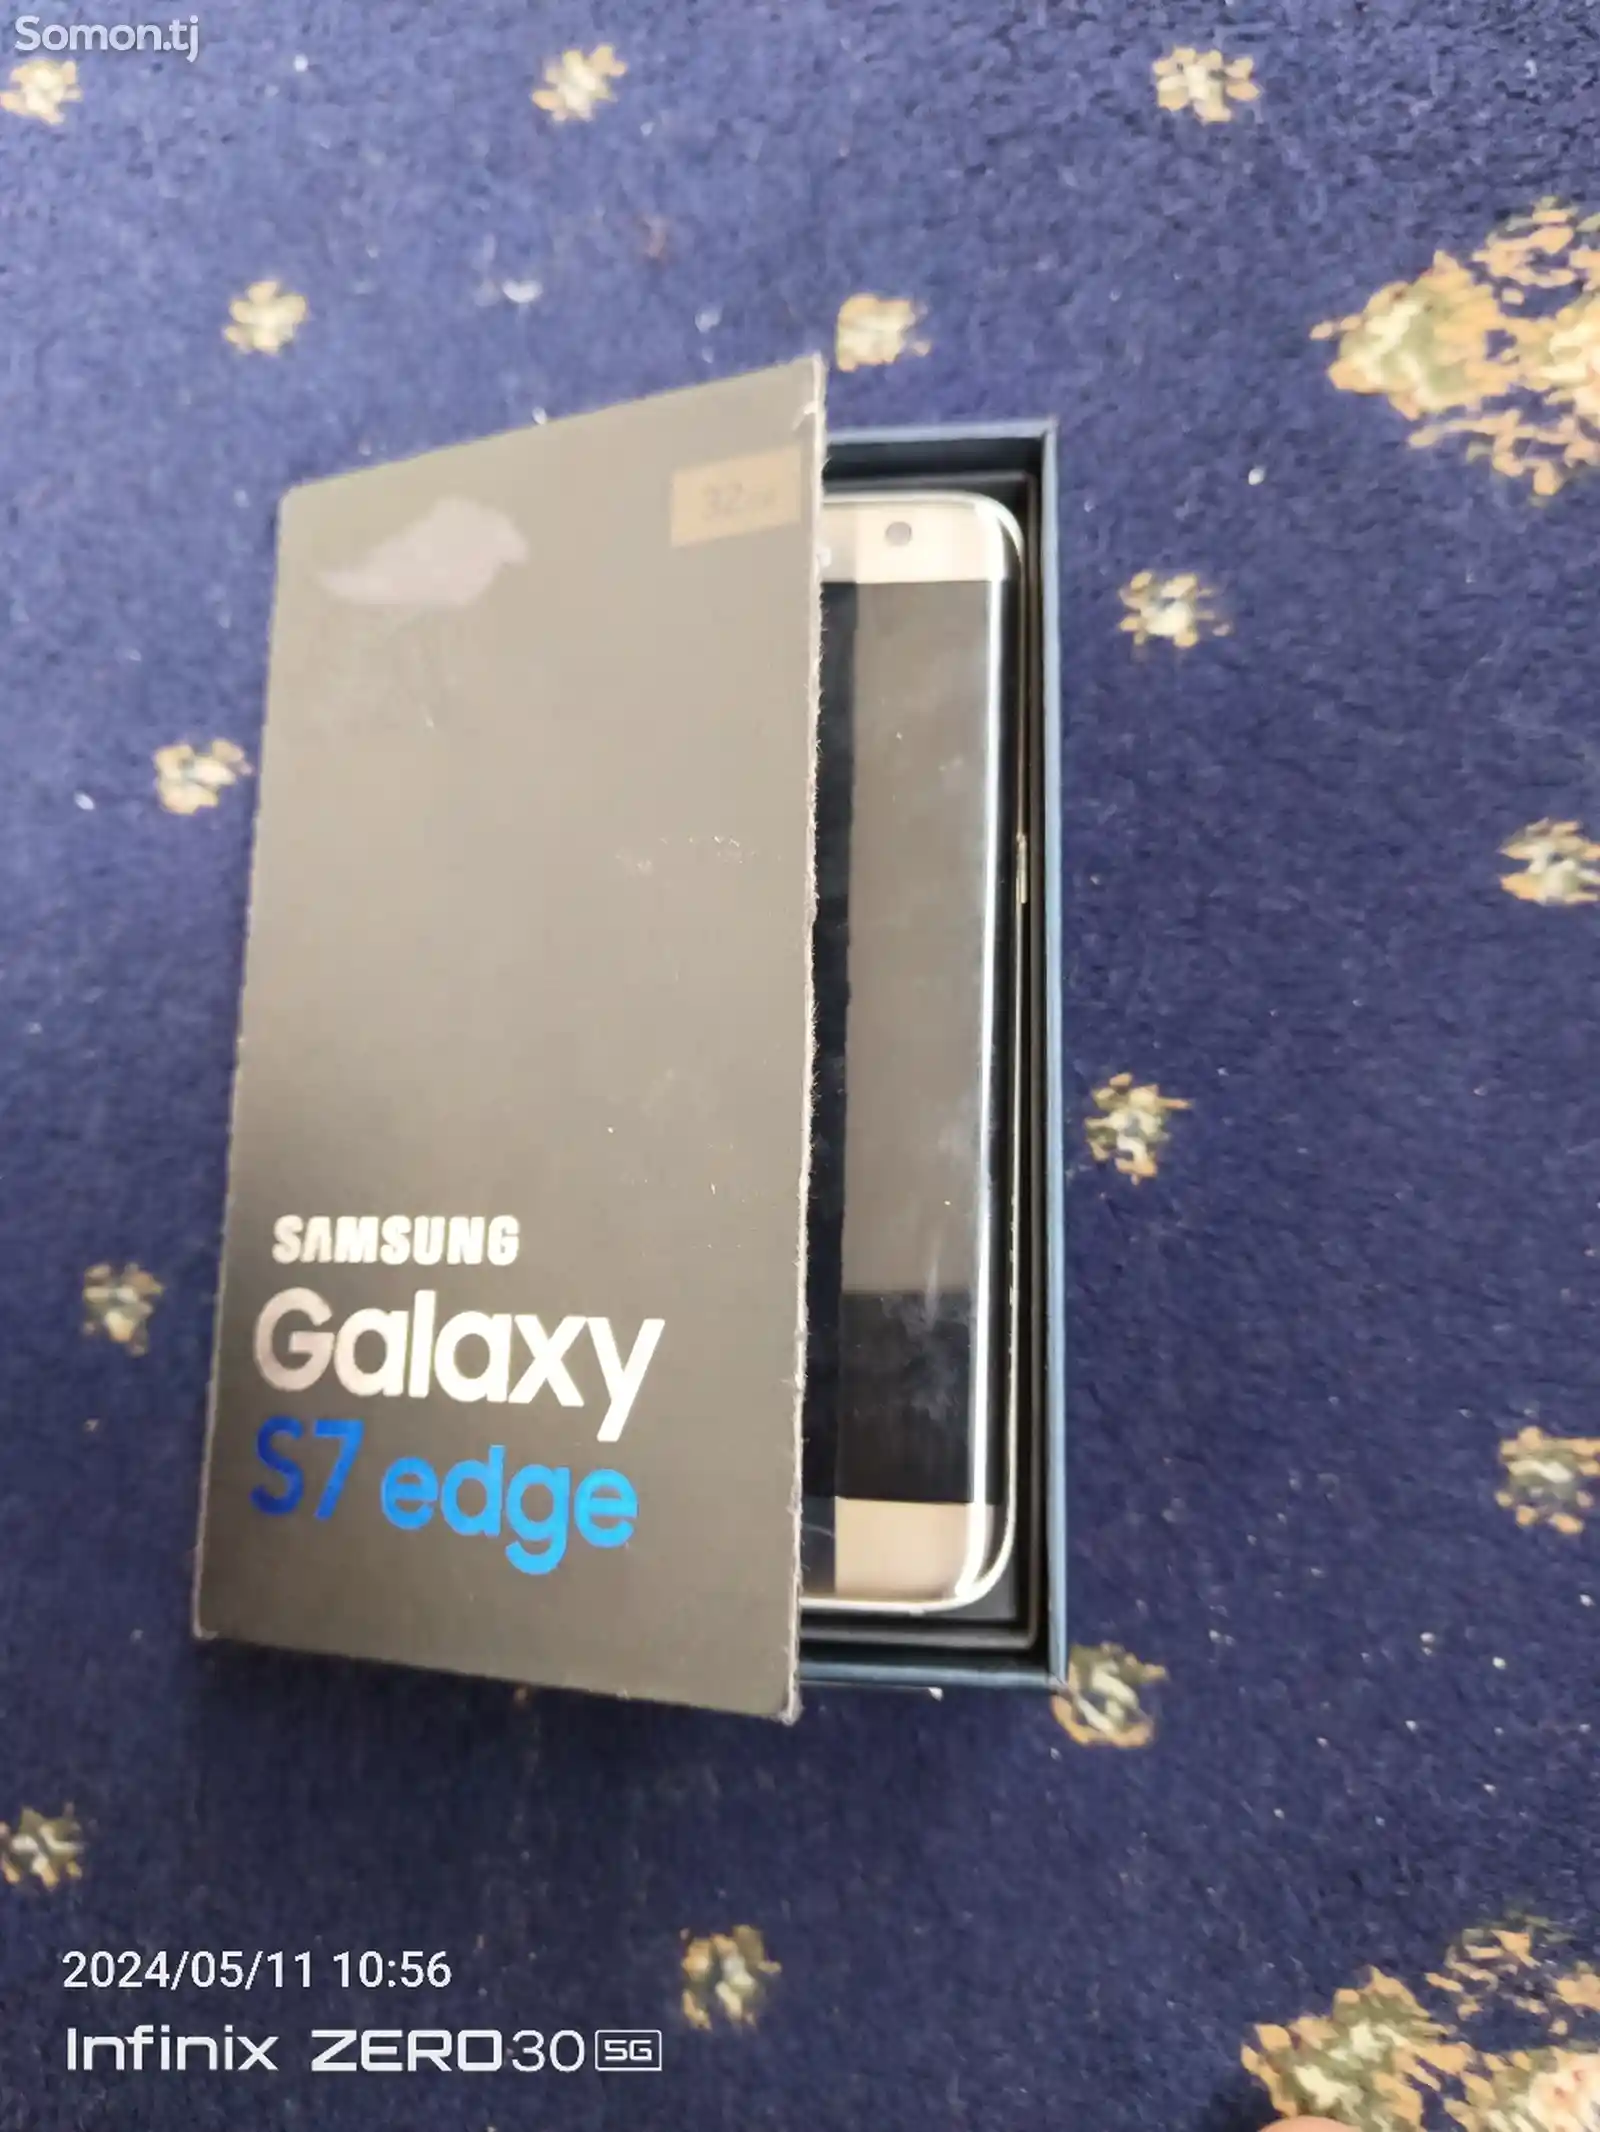 Samsung Galaxy S7 edge-7